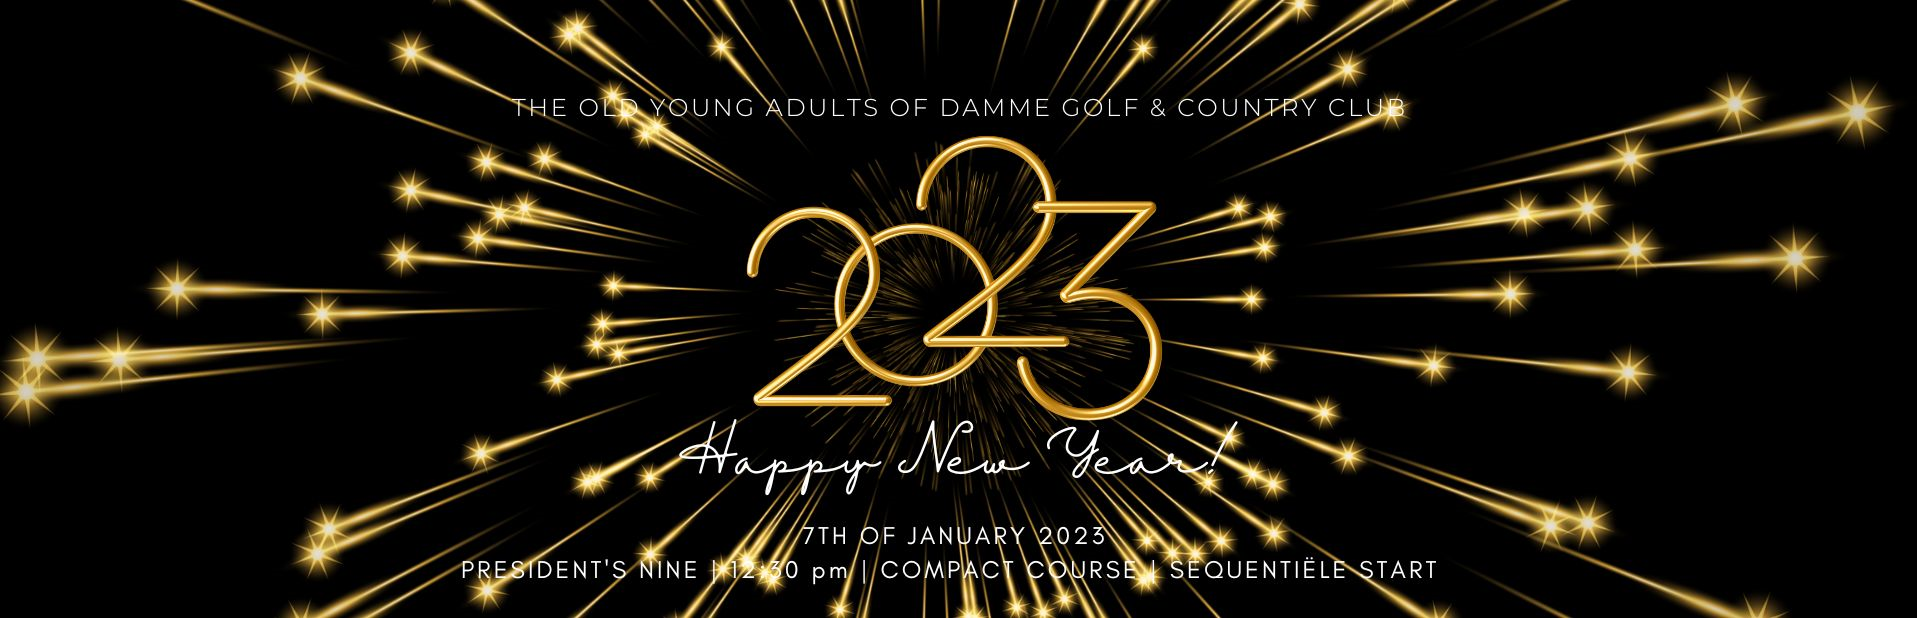 2023.01.07 Happy New Year’s Golf 2023